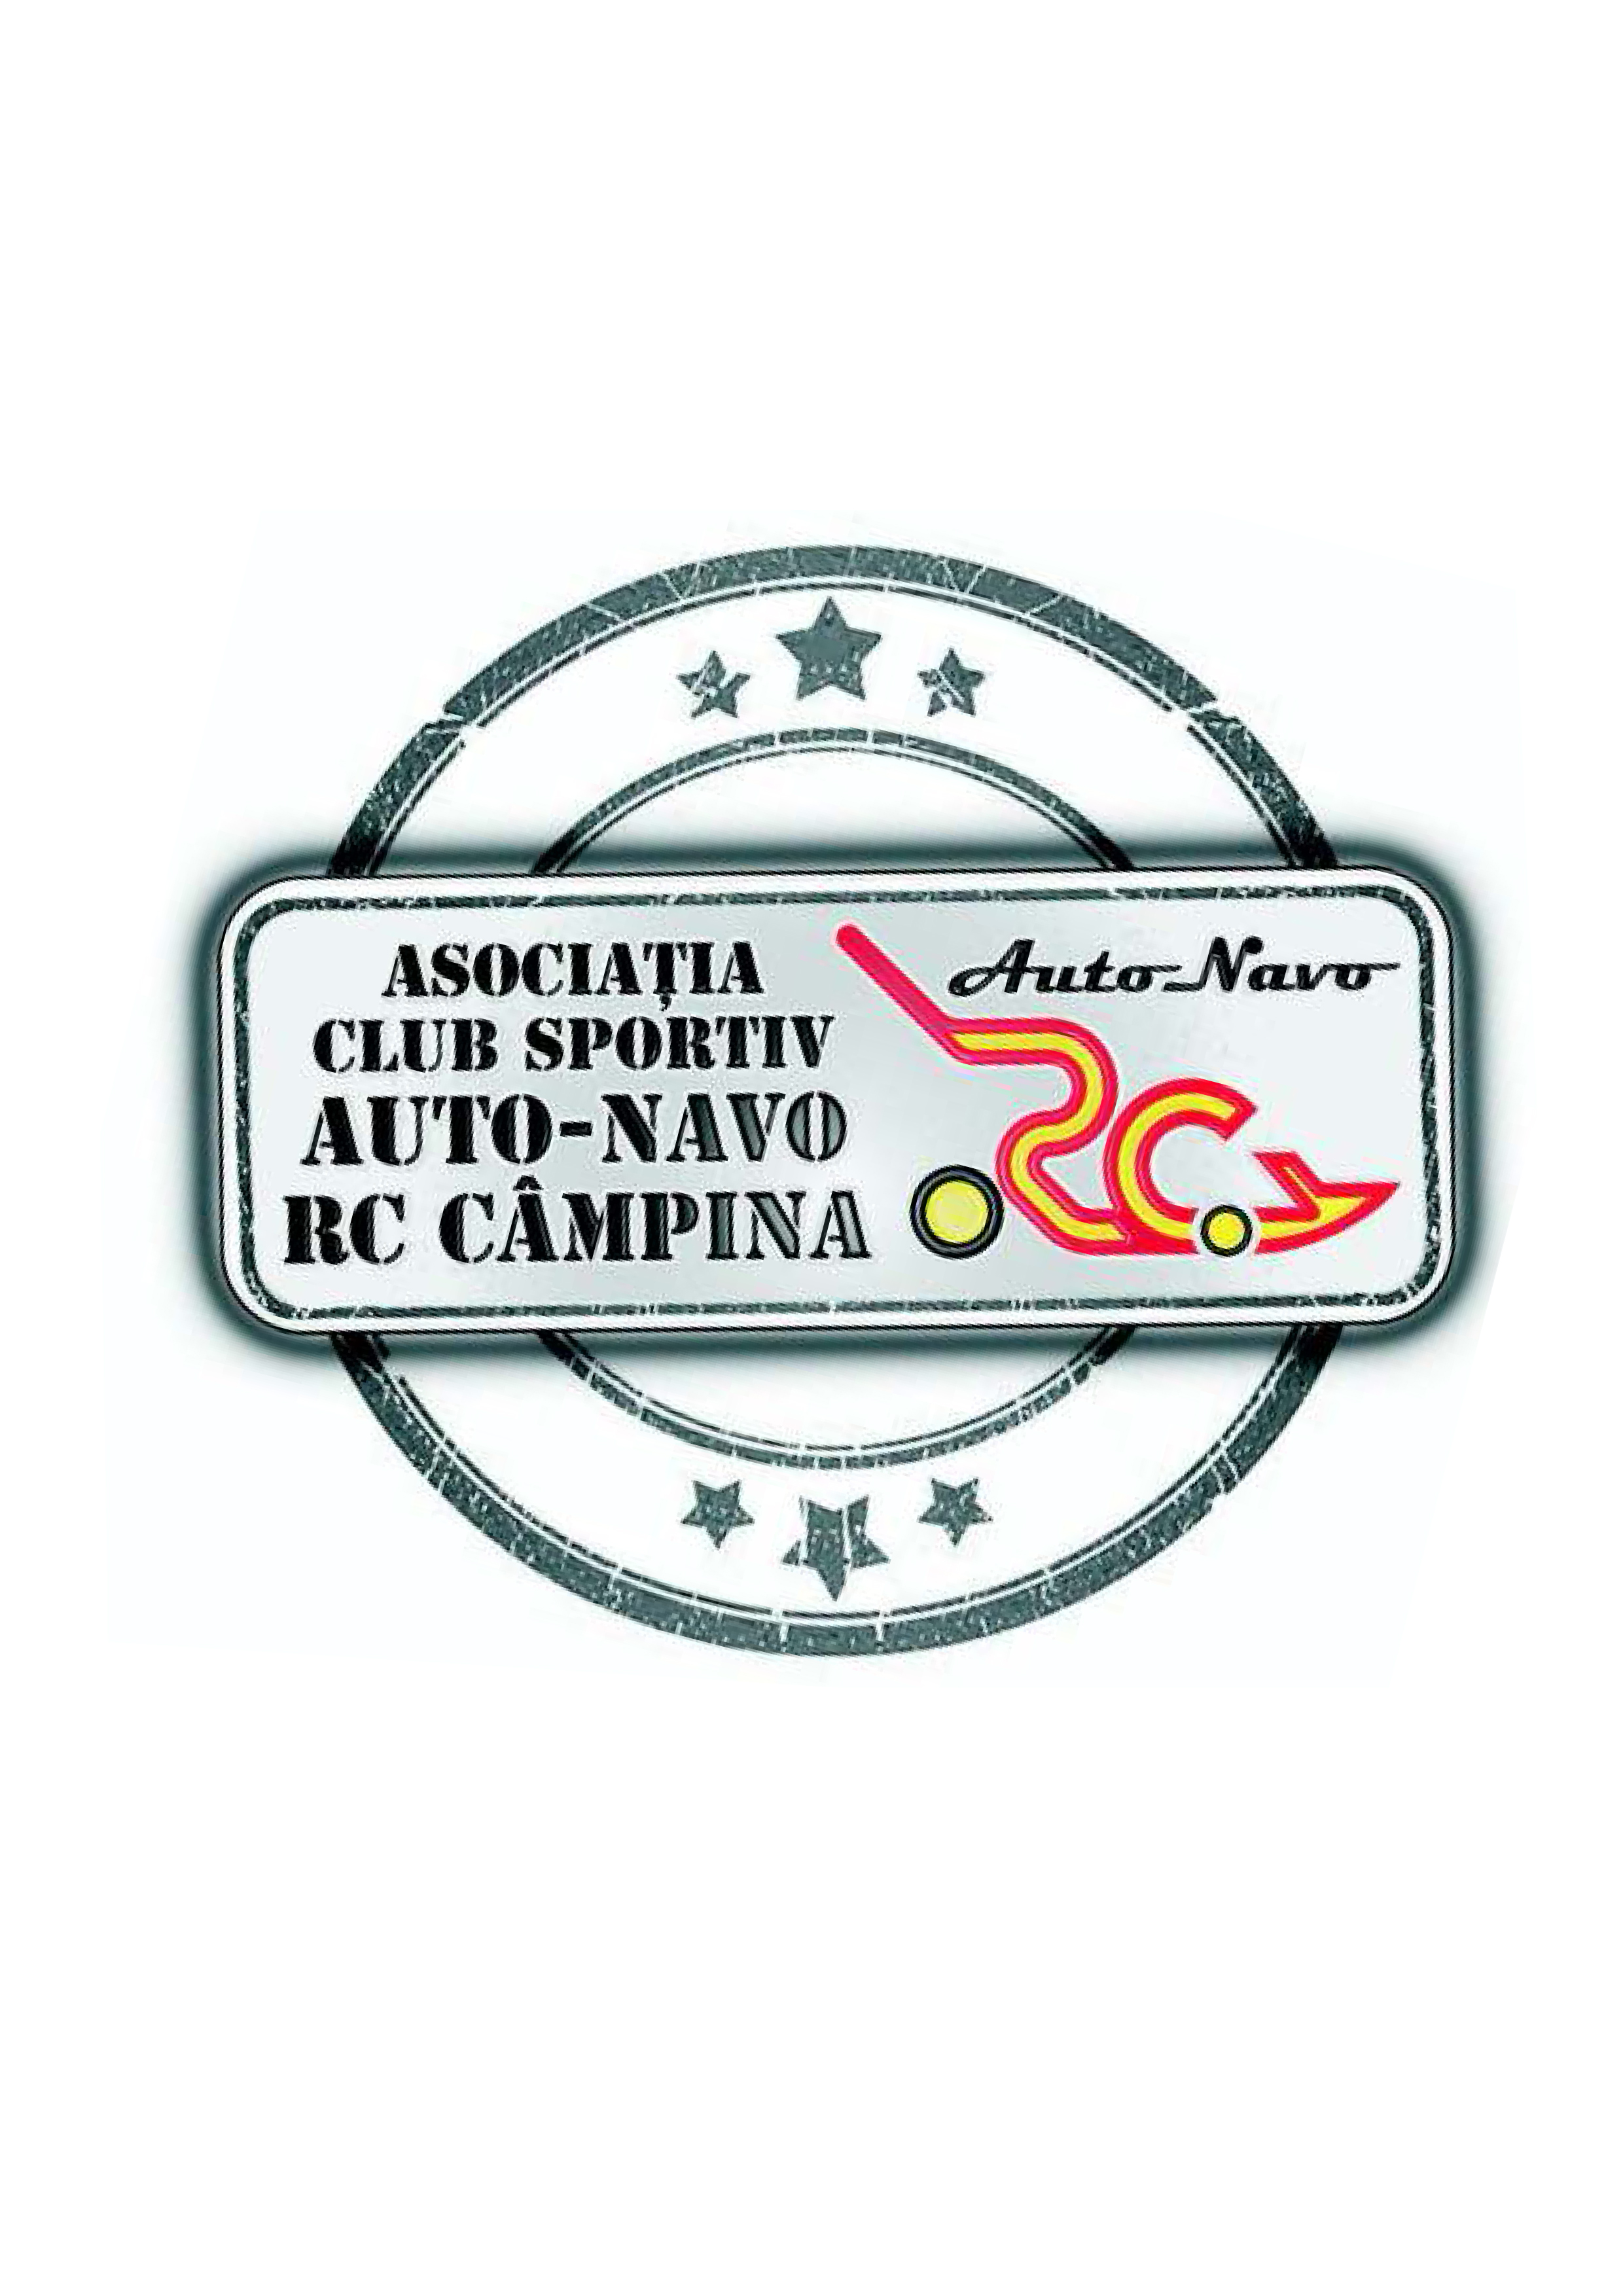 ASOCIATIA CLUB SPORTIV AUTO-NAVO RC CAMPINA logo